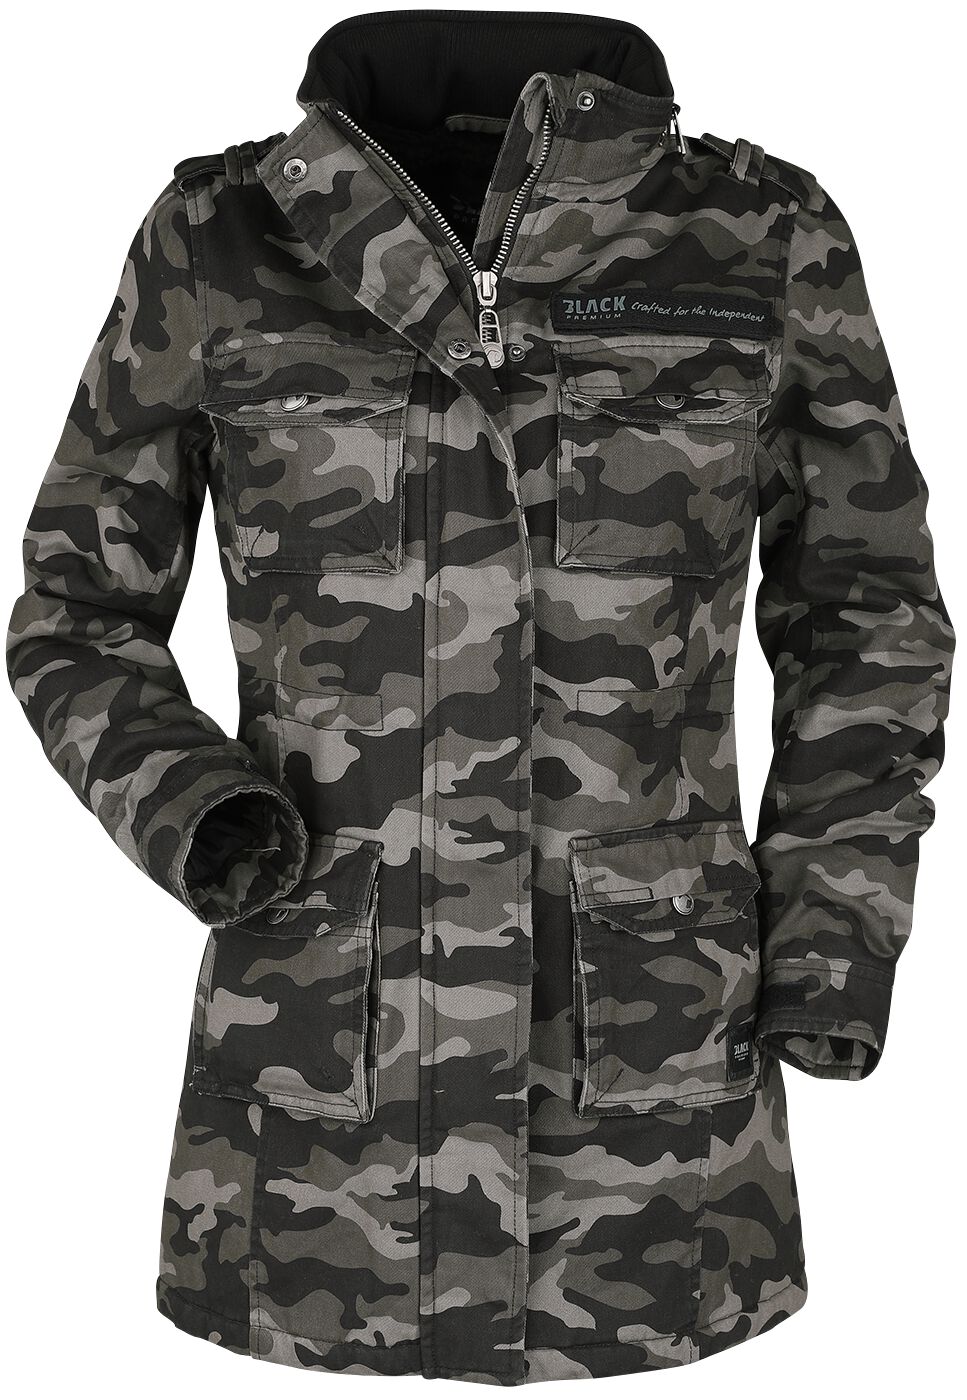 Black Premium by EMP - Ladies Field Jacket - Winterjacke - darkcamo - EMP Exklusiv!